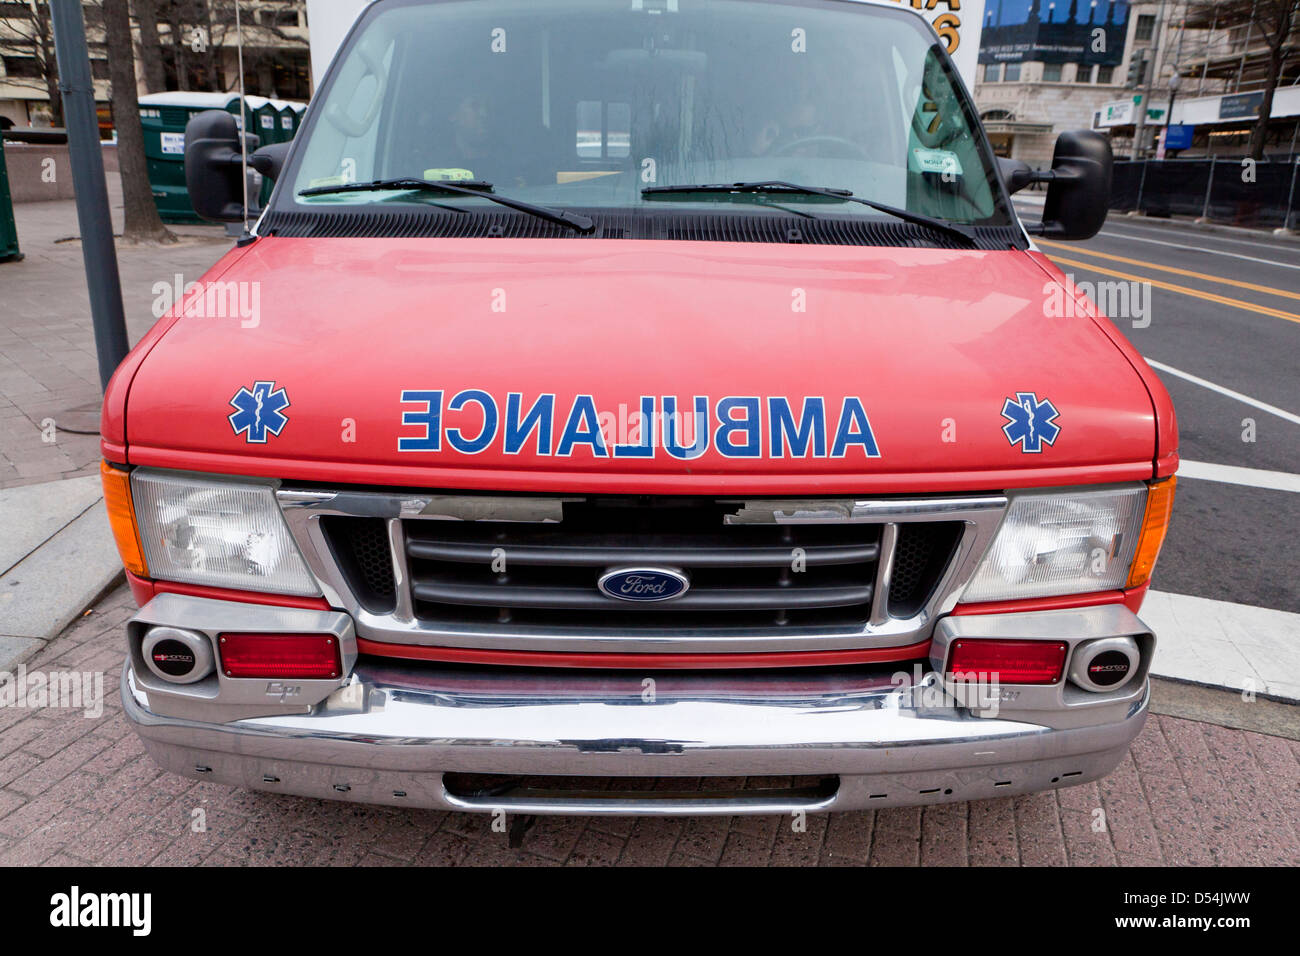 Vista frontal de la ambulancia - EE.UU. Foto de stock